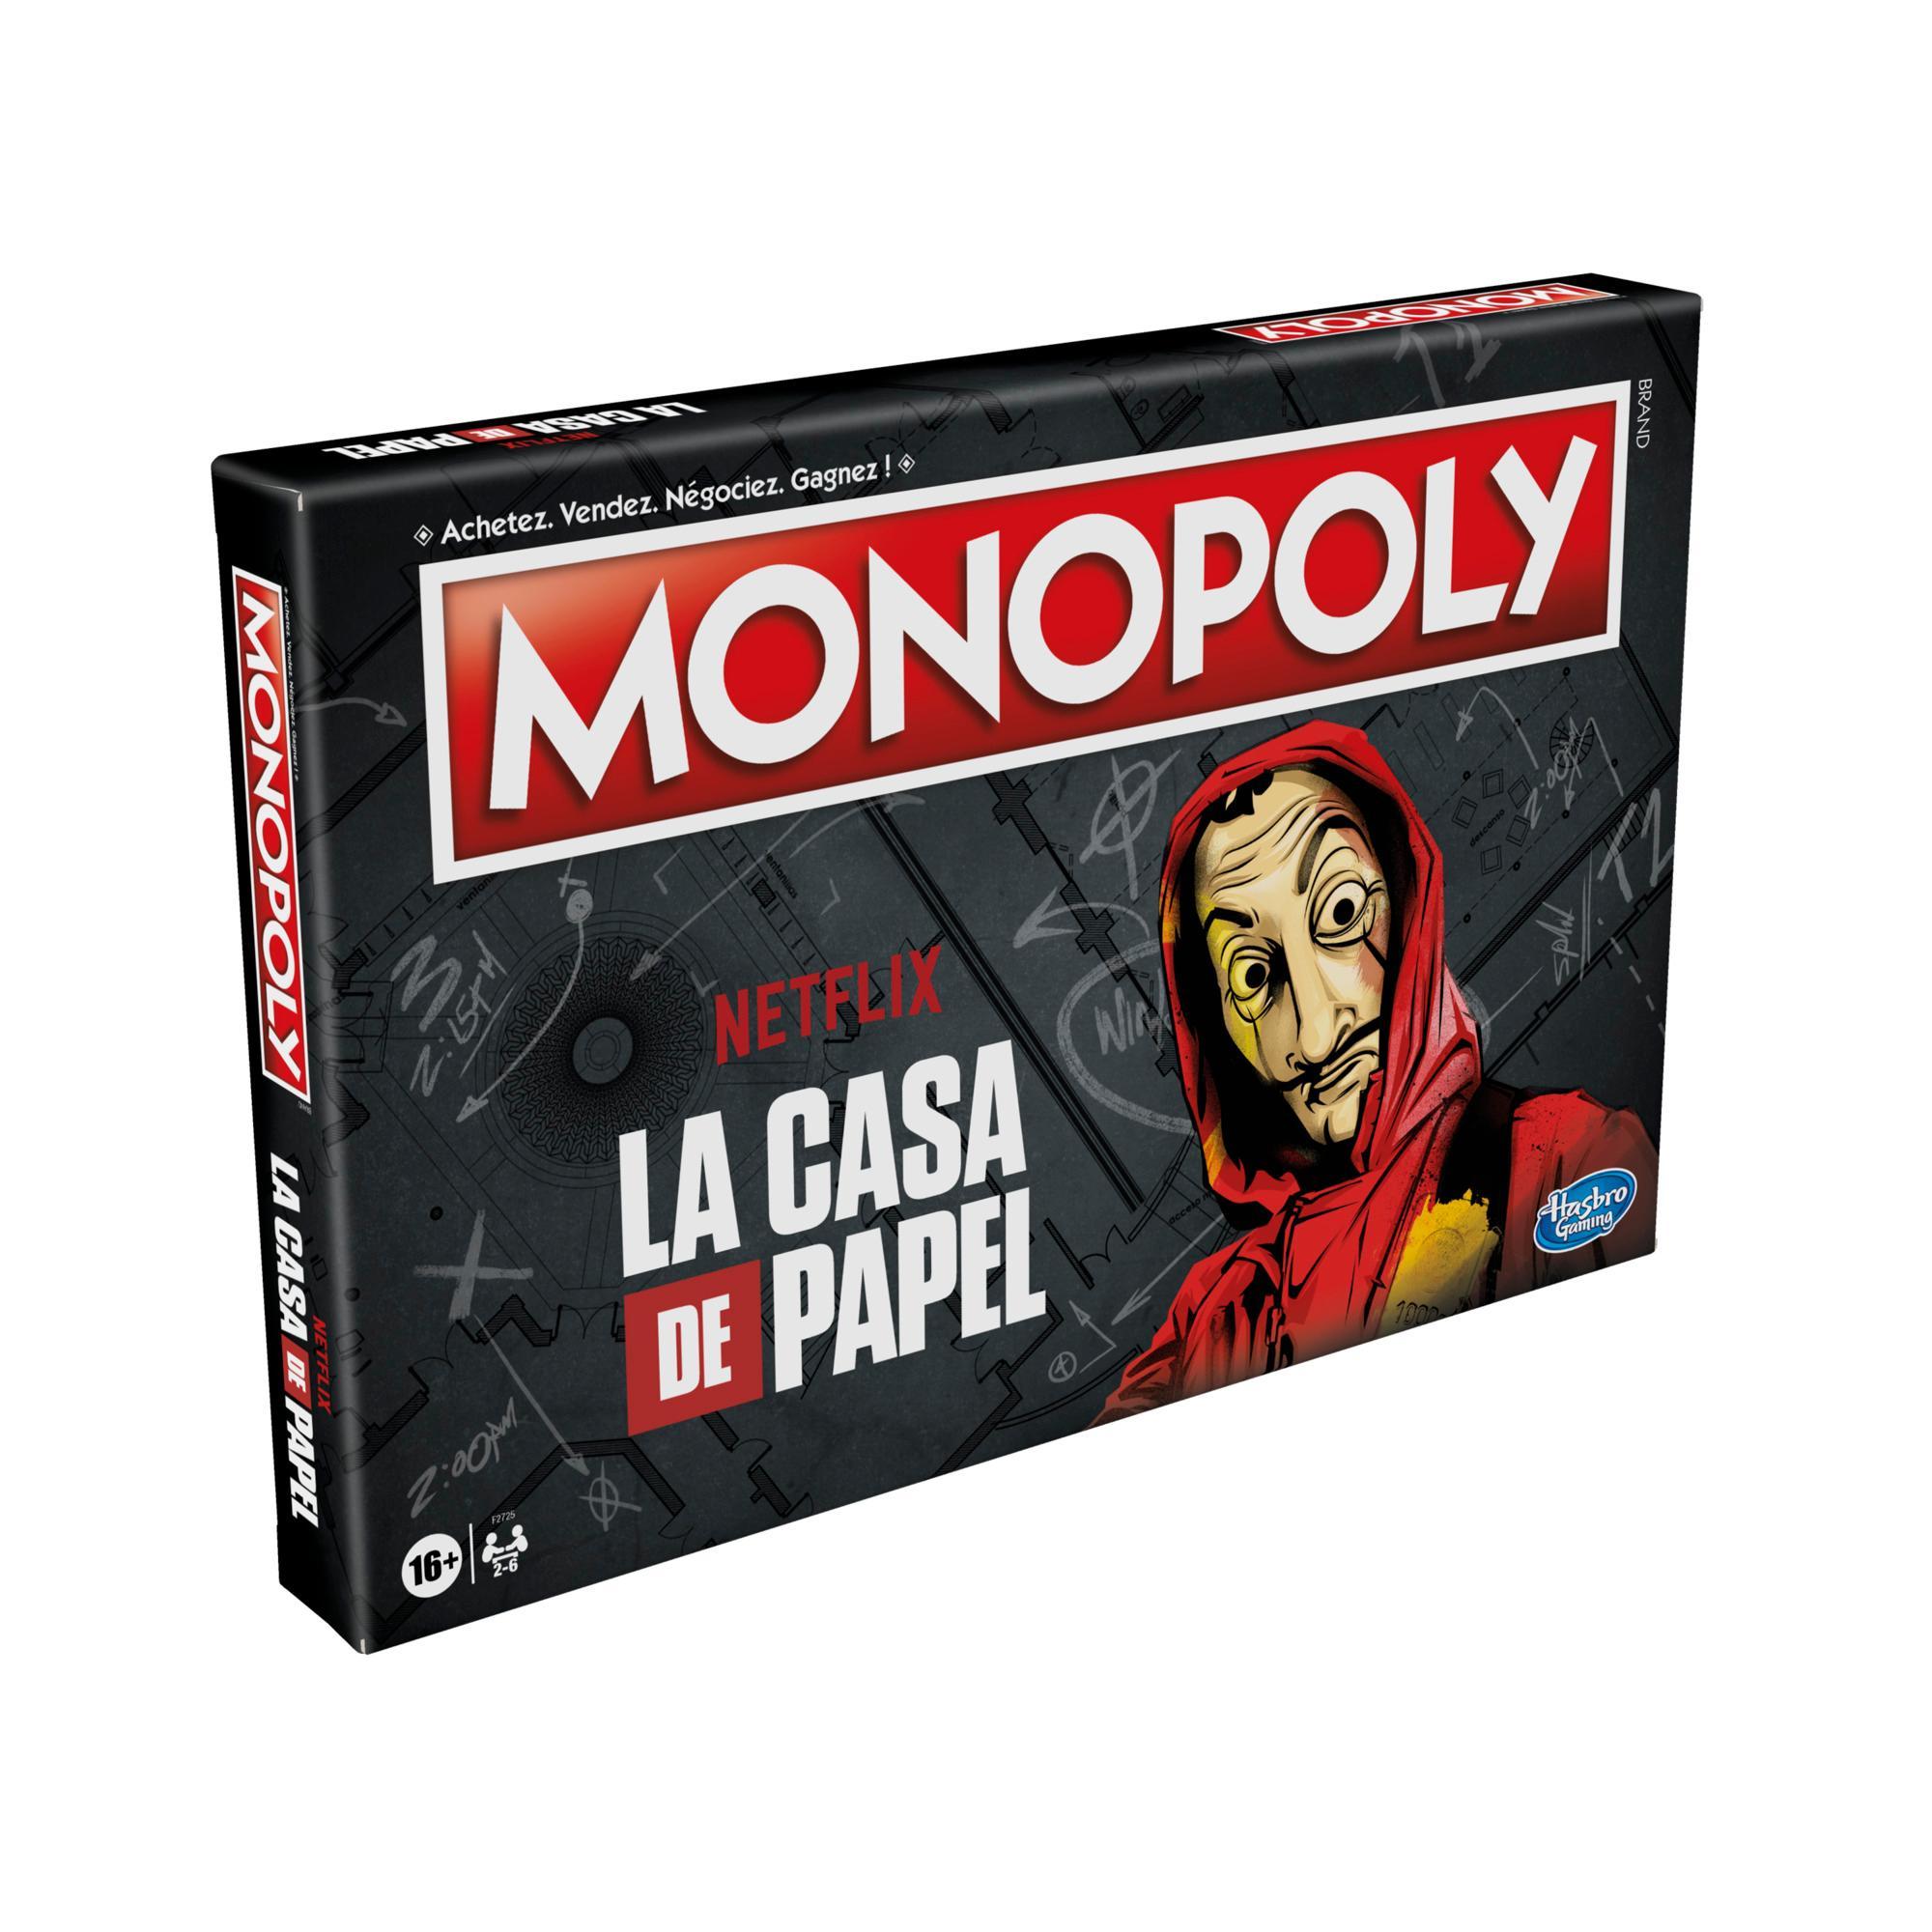 Monopoly Faux billets